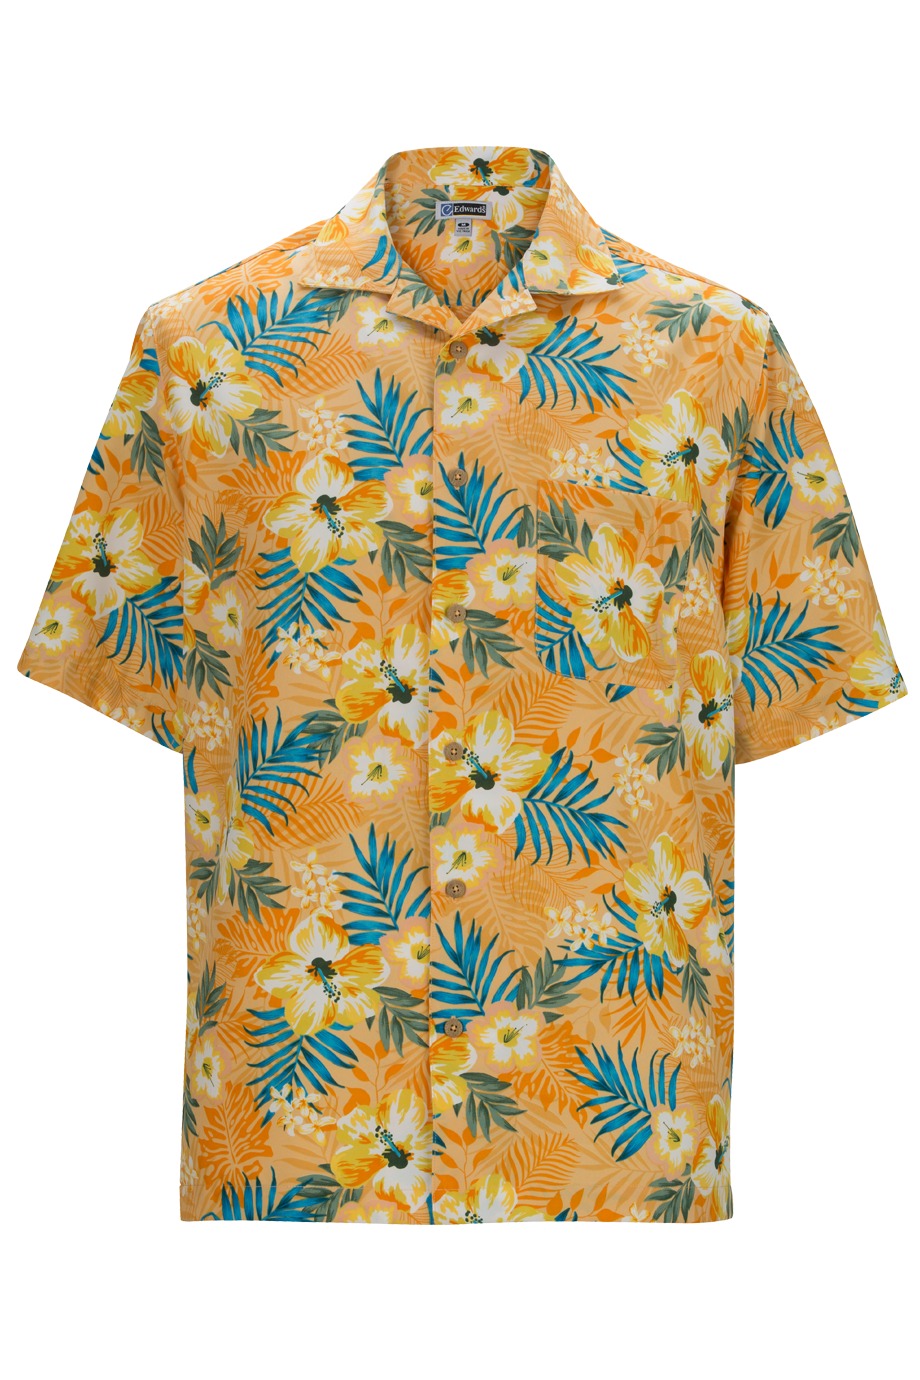 Edwards Garment 1035 - Tropical Hibiscus Camp Shirt